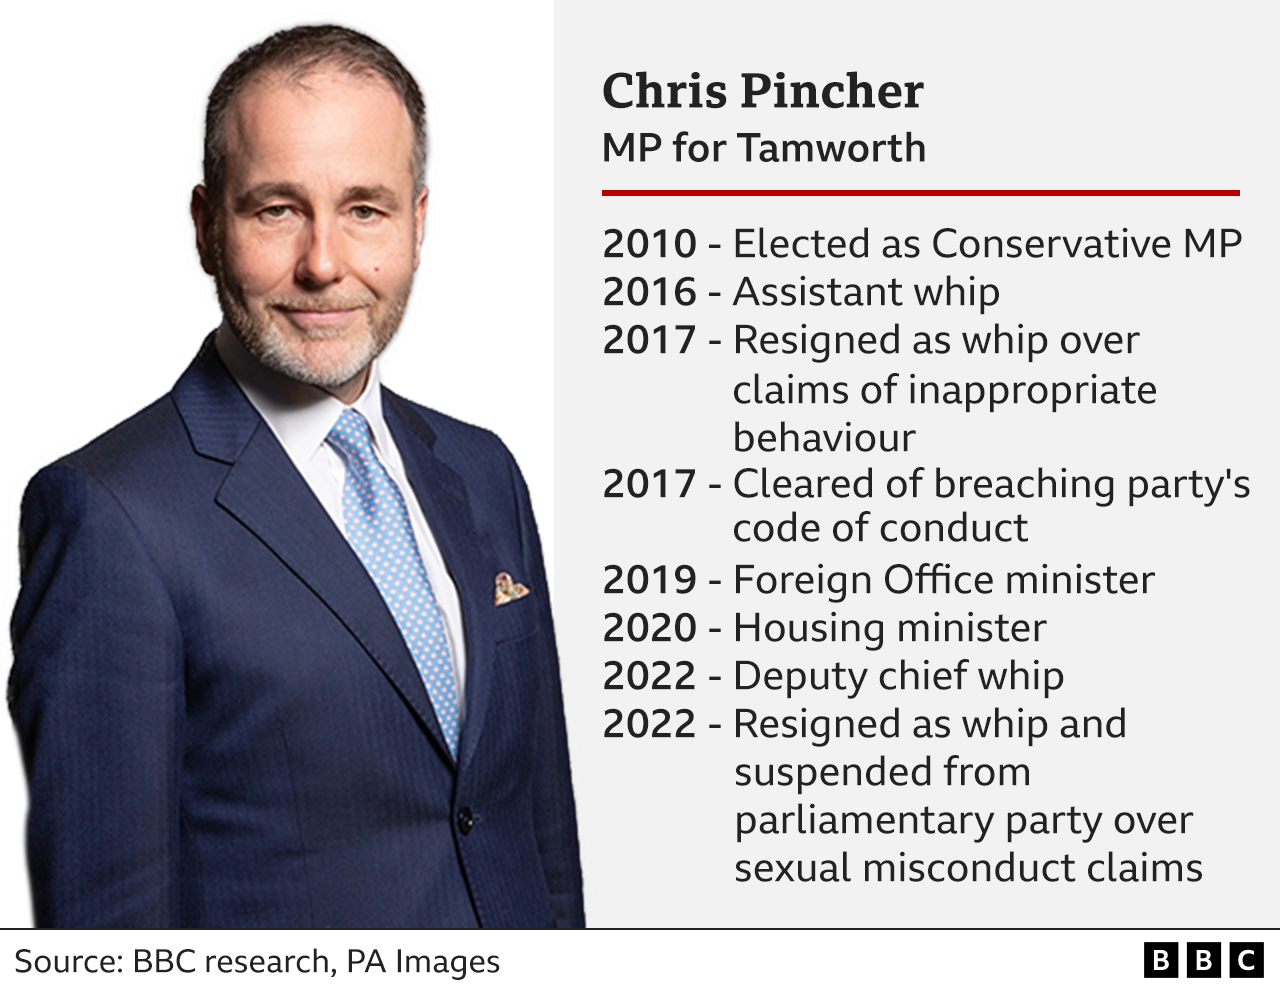 Chris Pincher